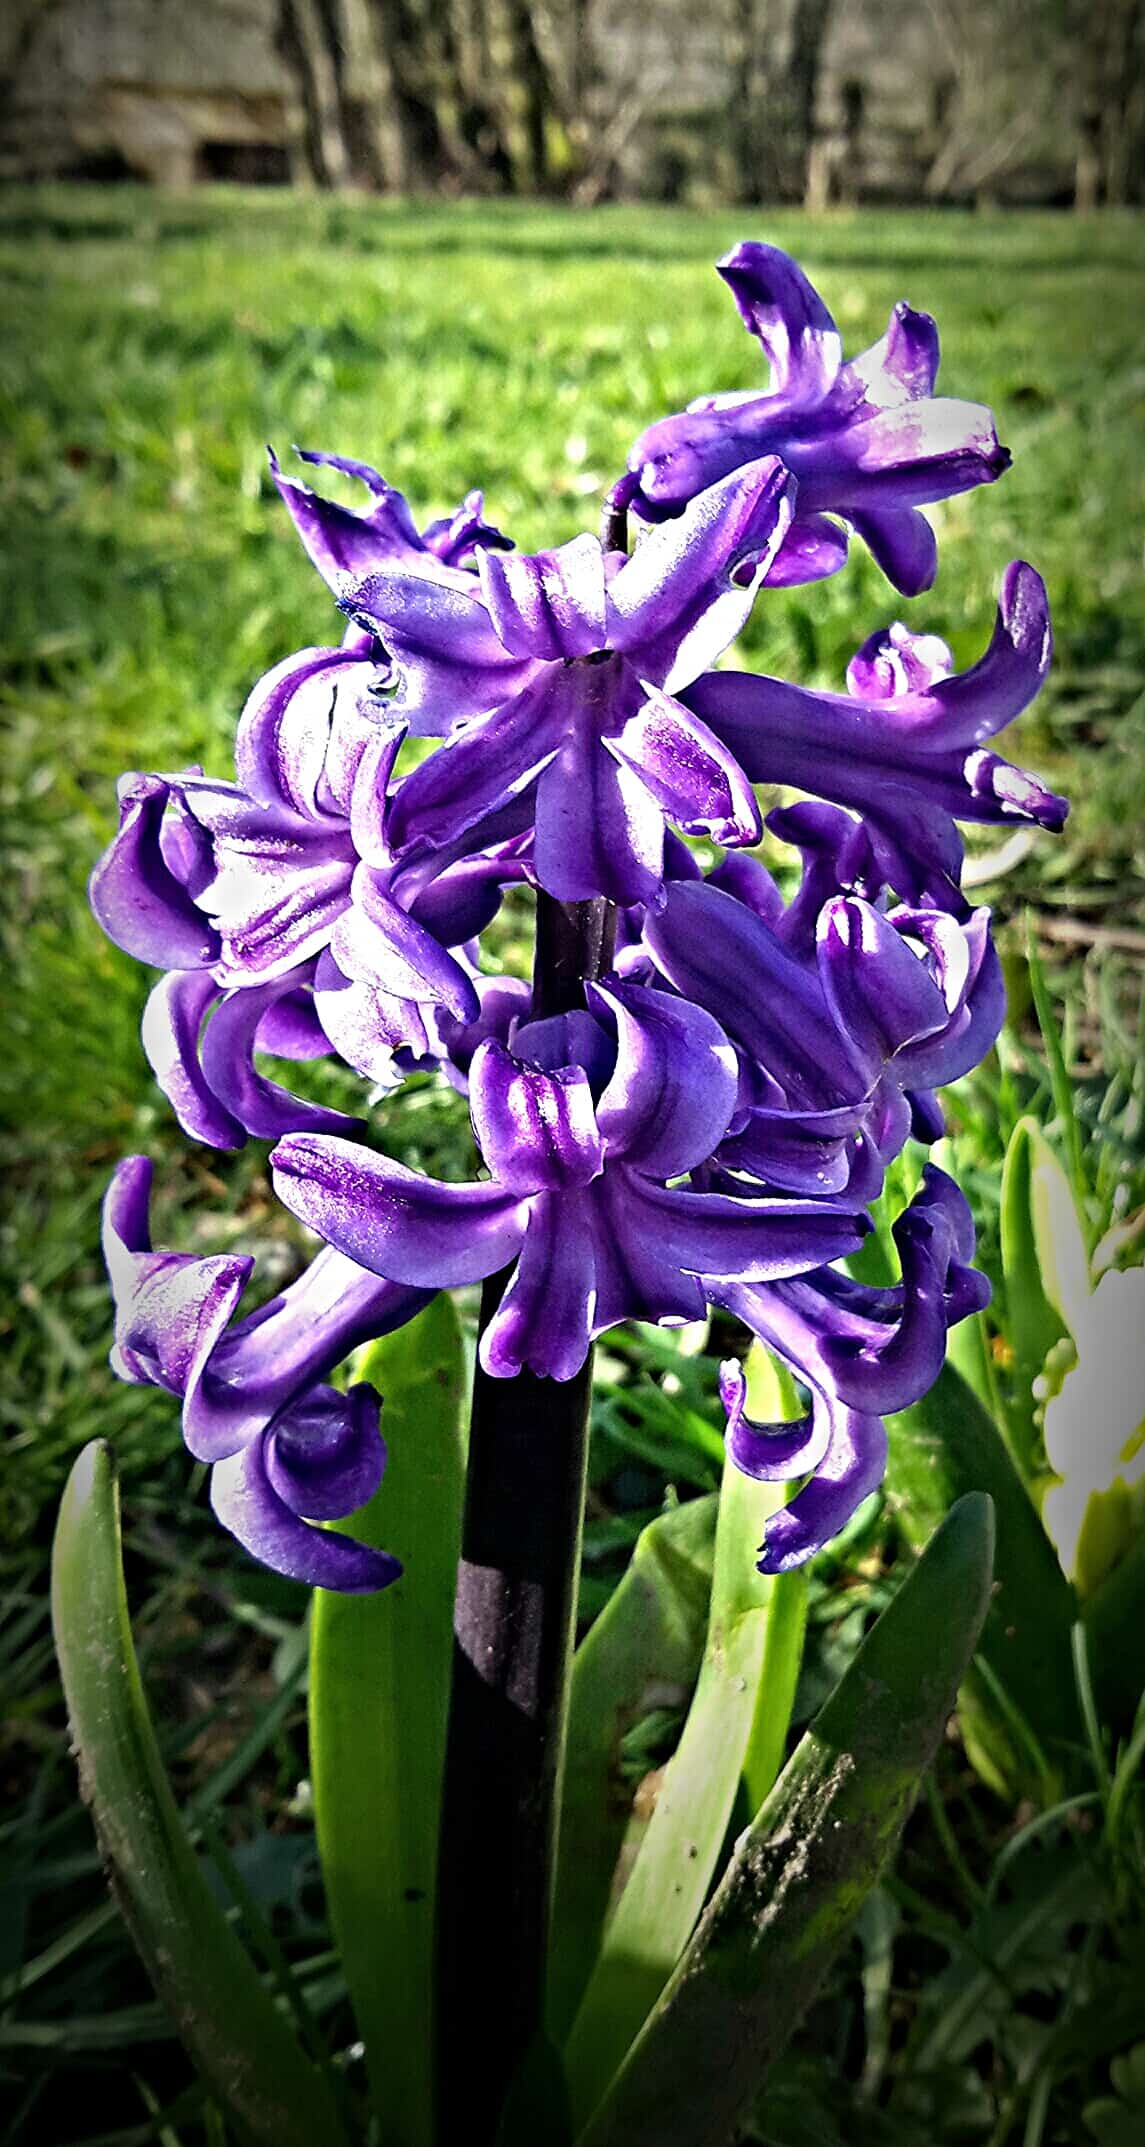 Sweet hyacinth